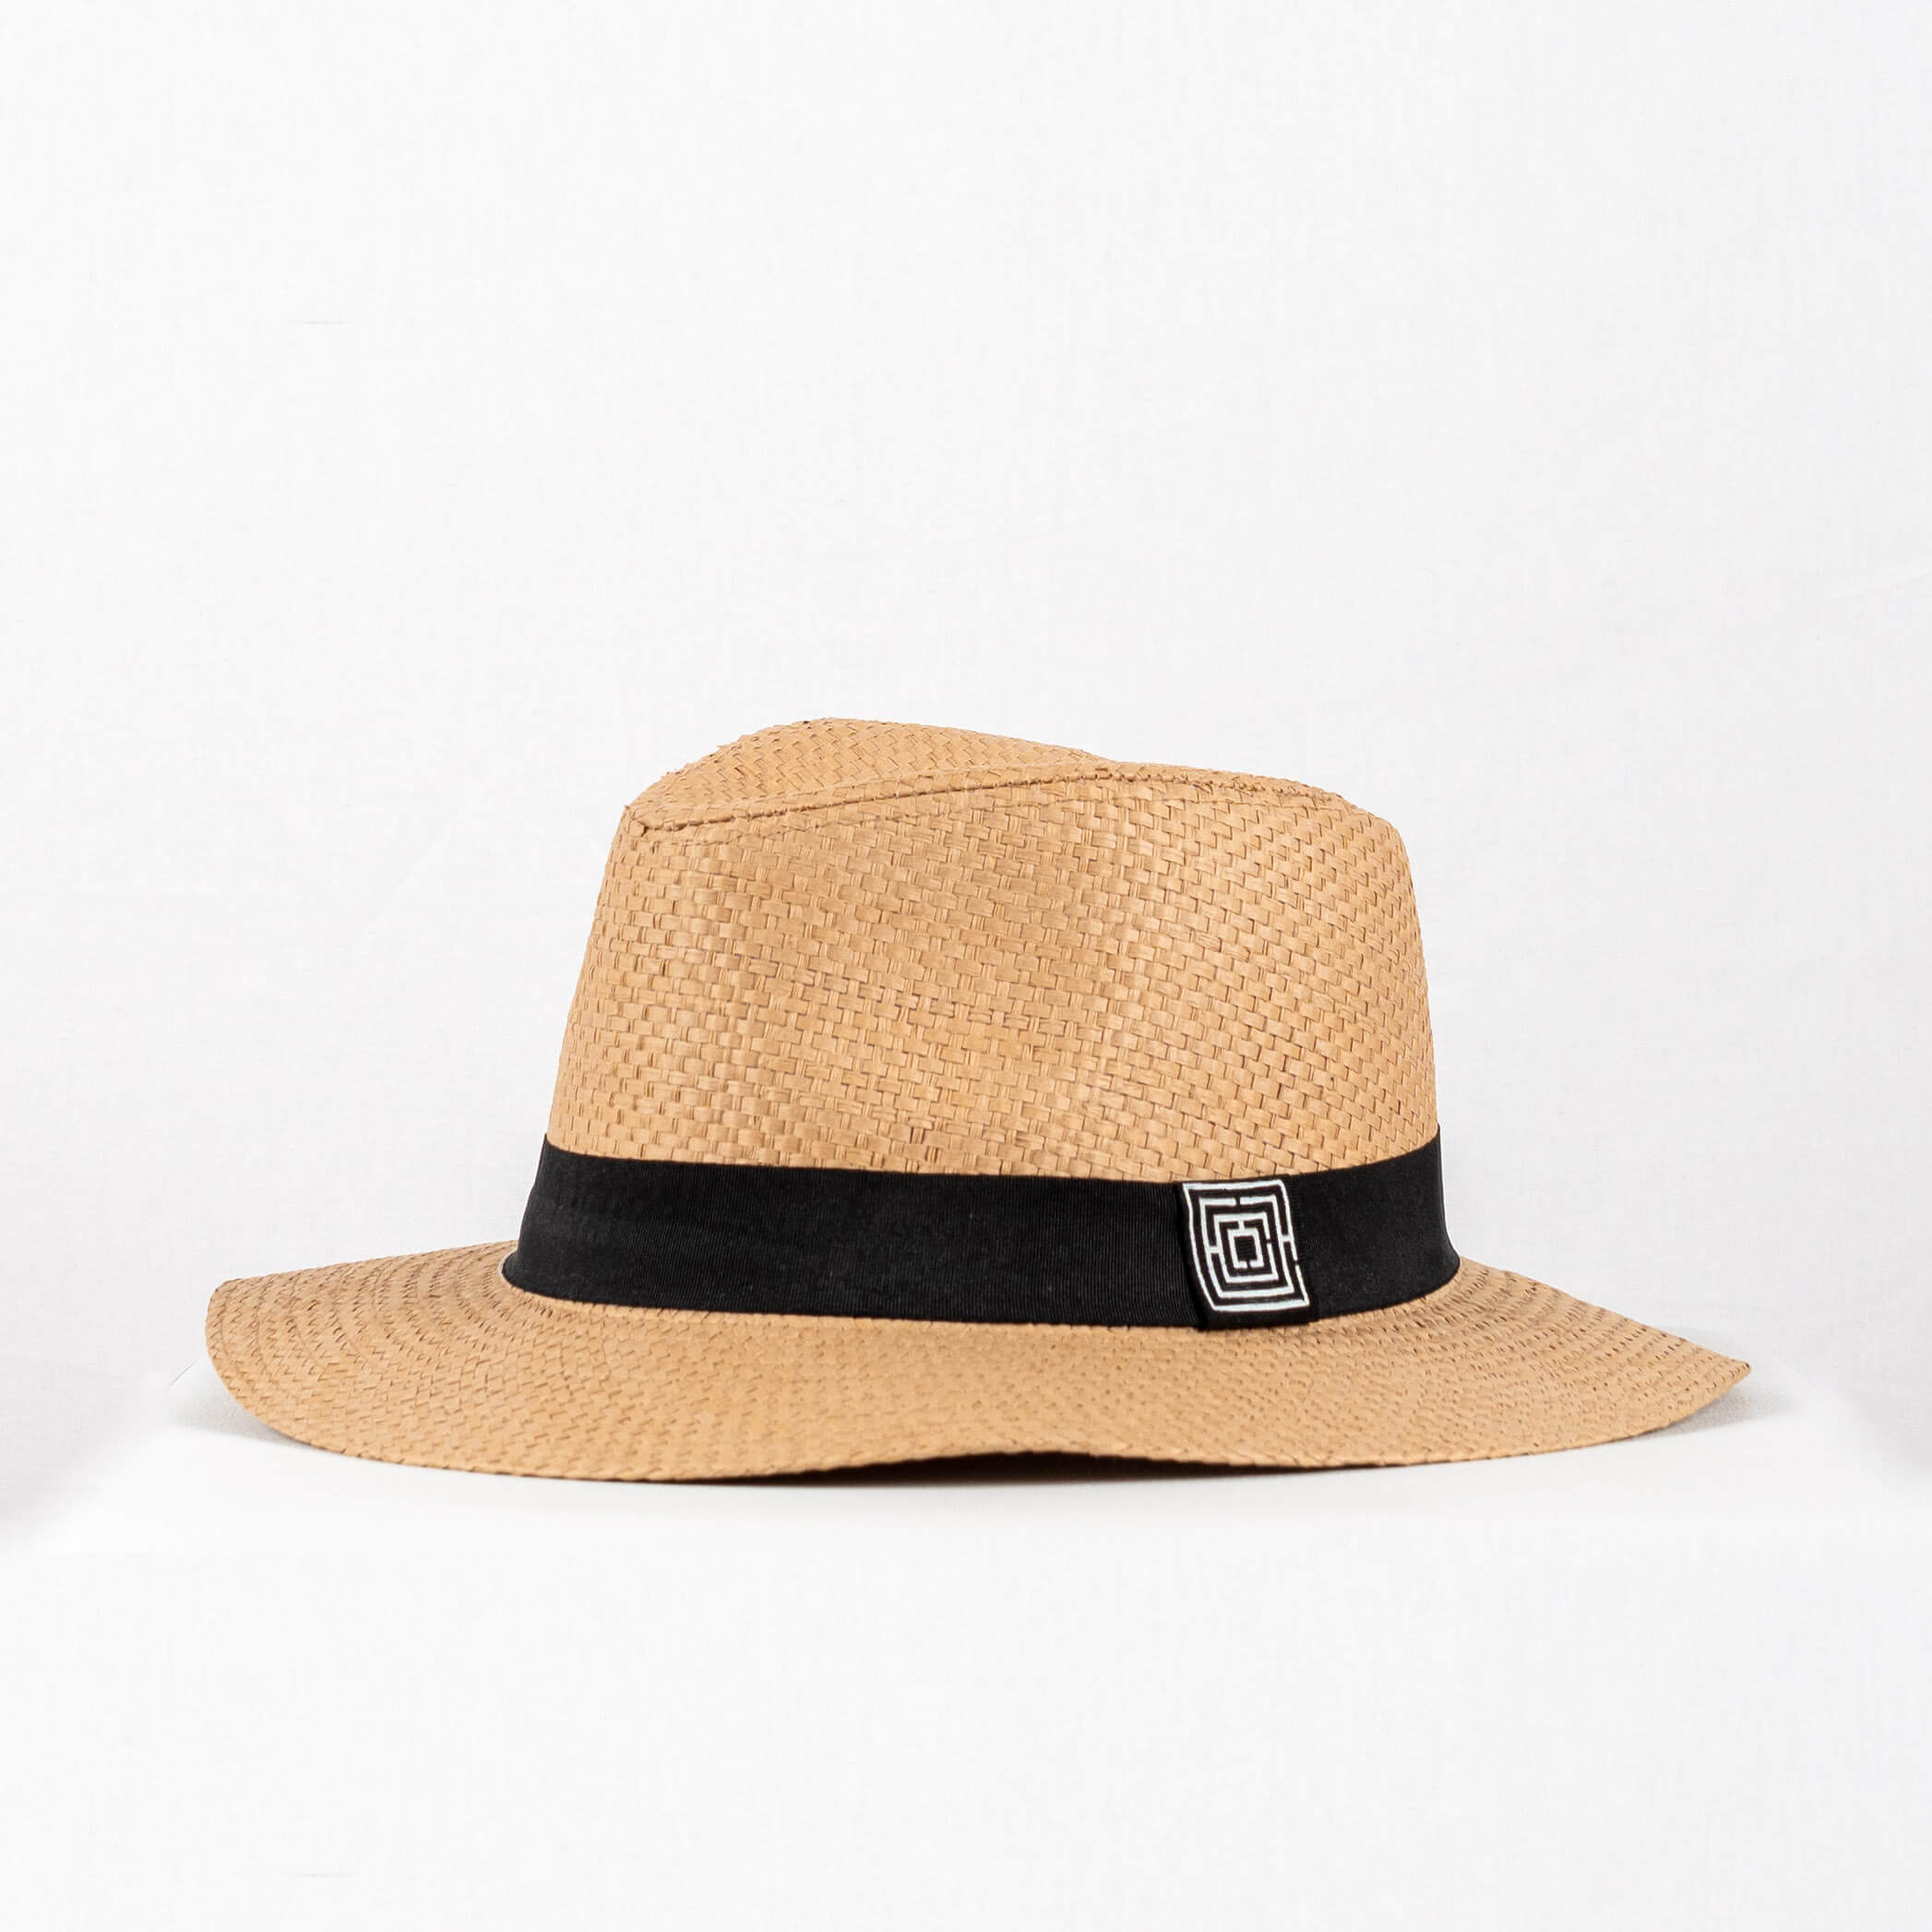 Abaton Panama hat